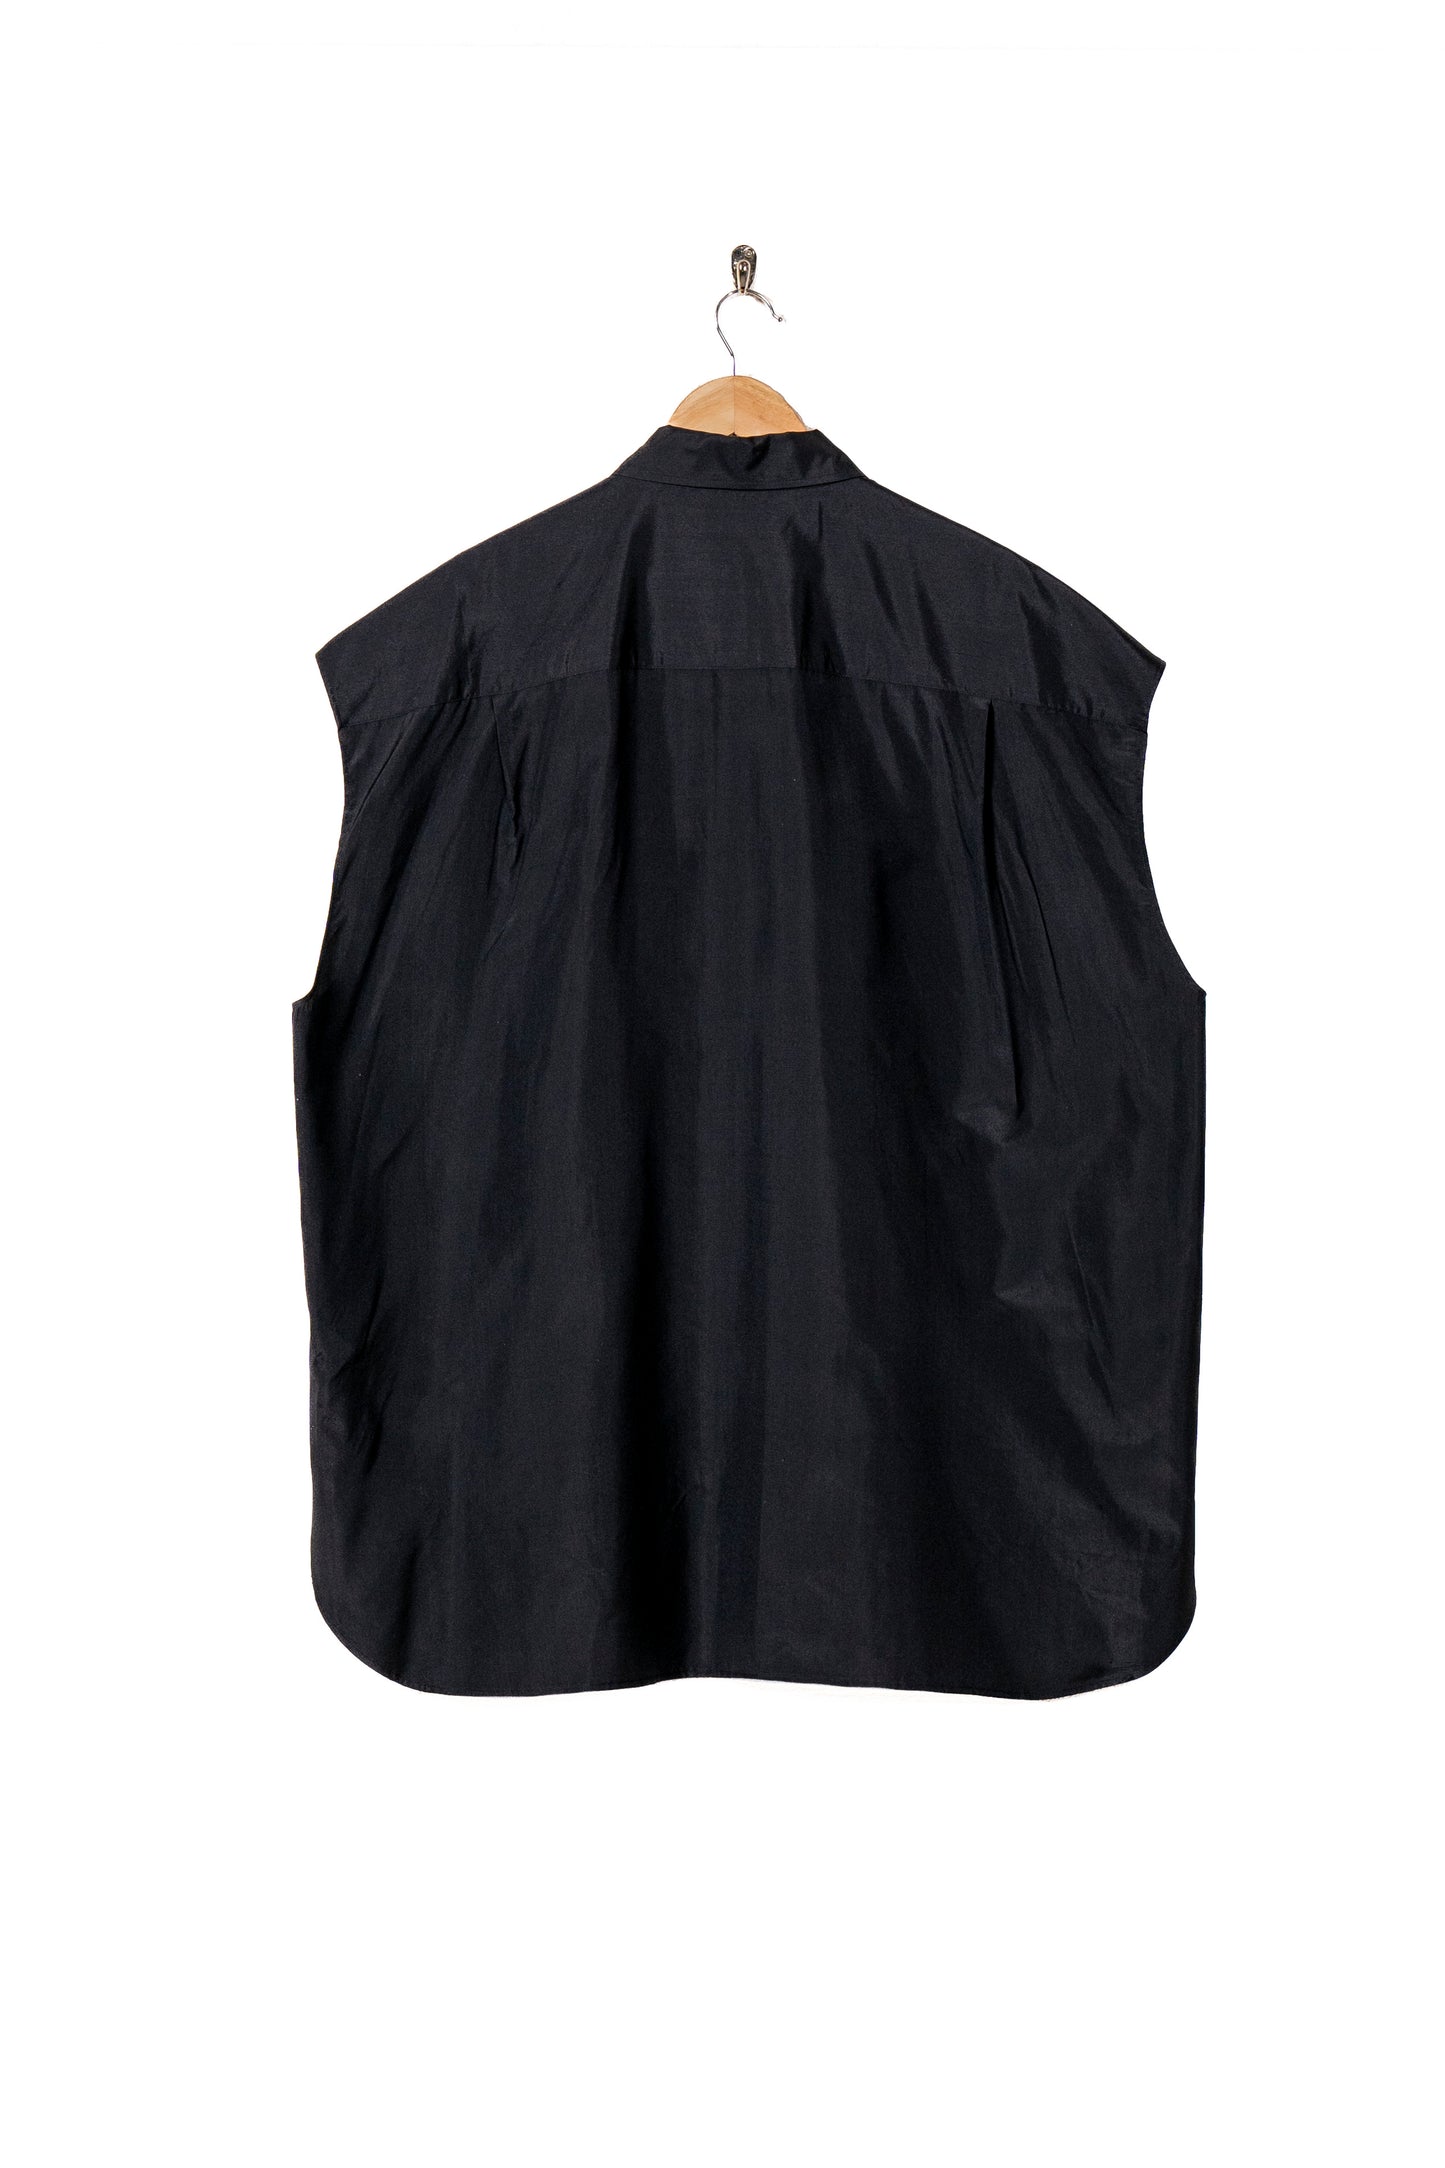 Silk taffeta sleeveless over shirt